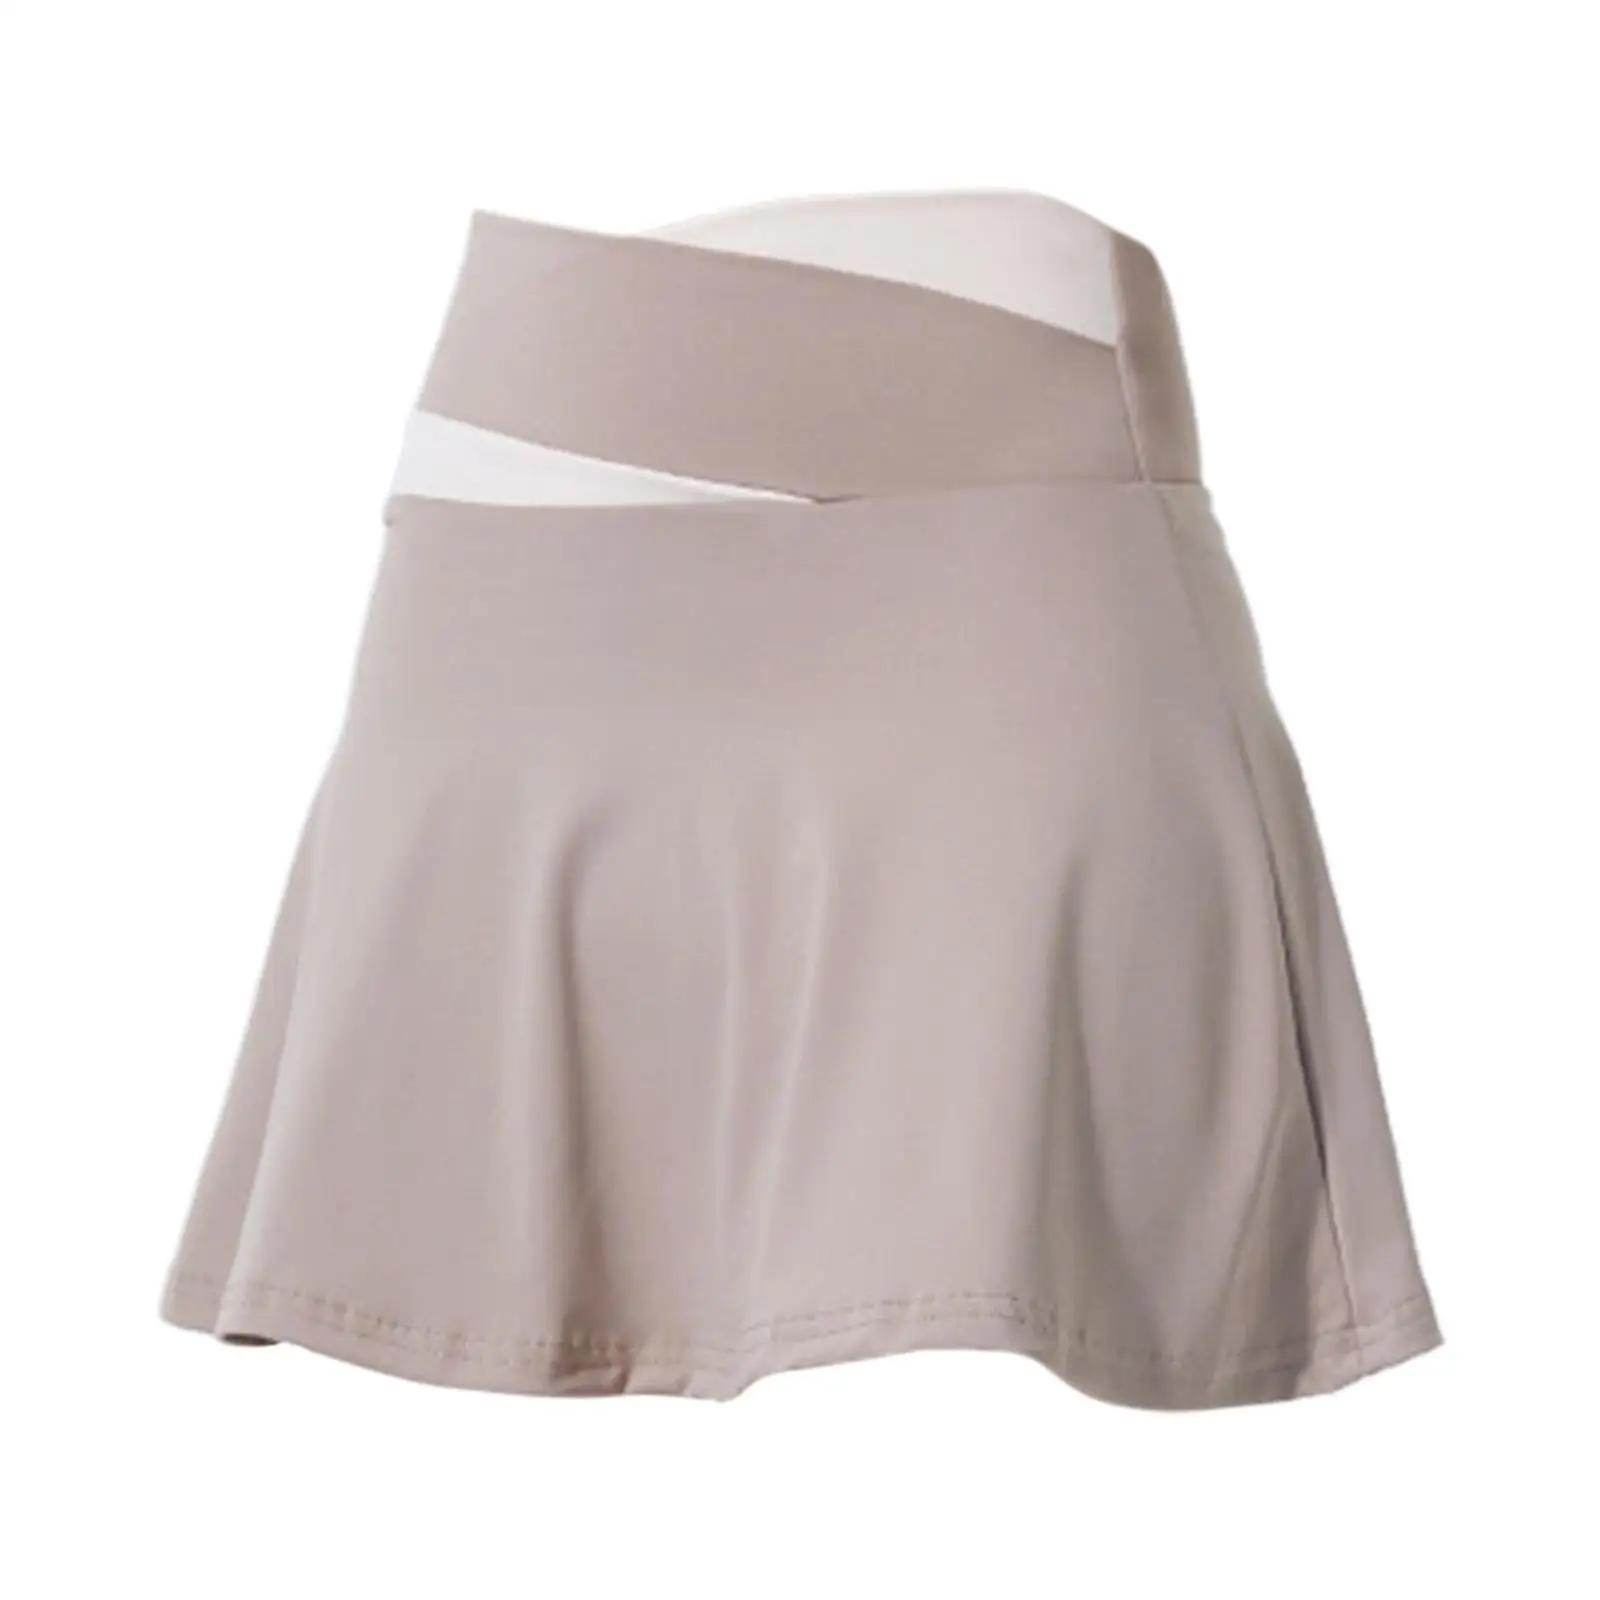 Tennis Skirts Short Skirt Casual Clothes Activewear Streetwear Cute Soft Womens Skirt for Running Jogging Workout Tennis Sports